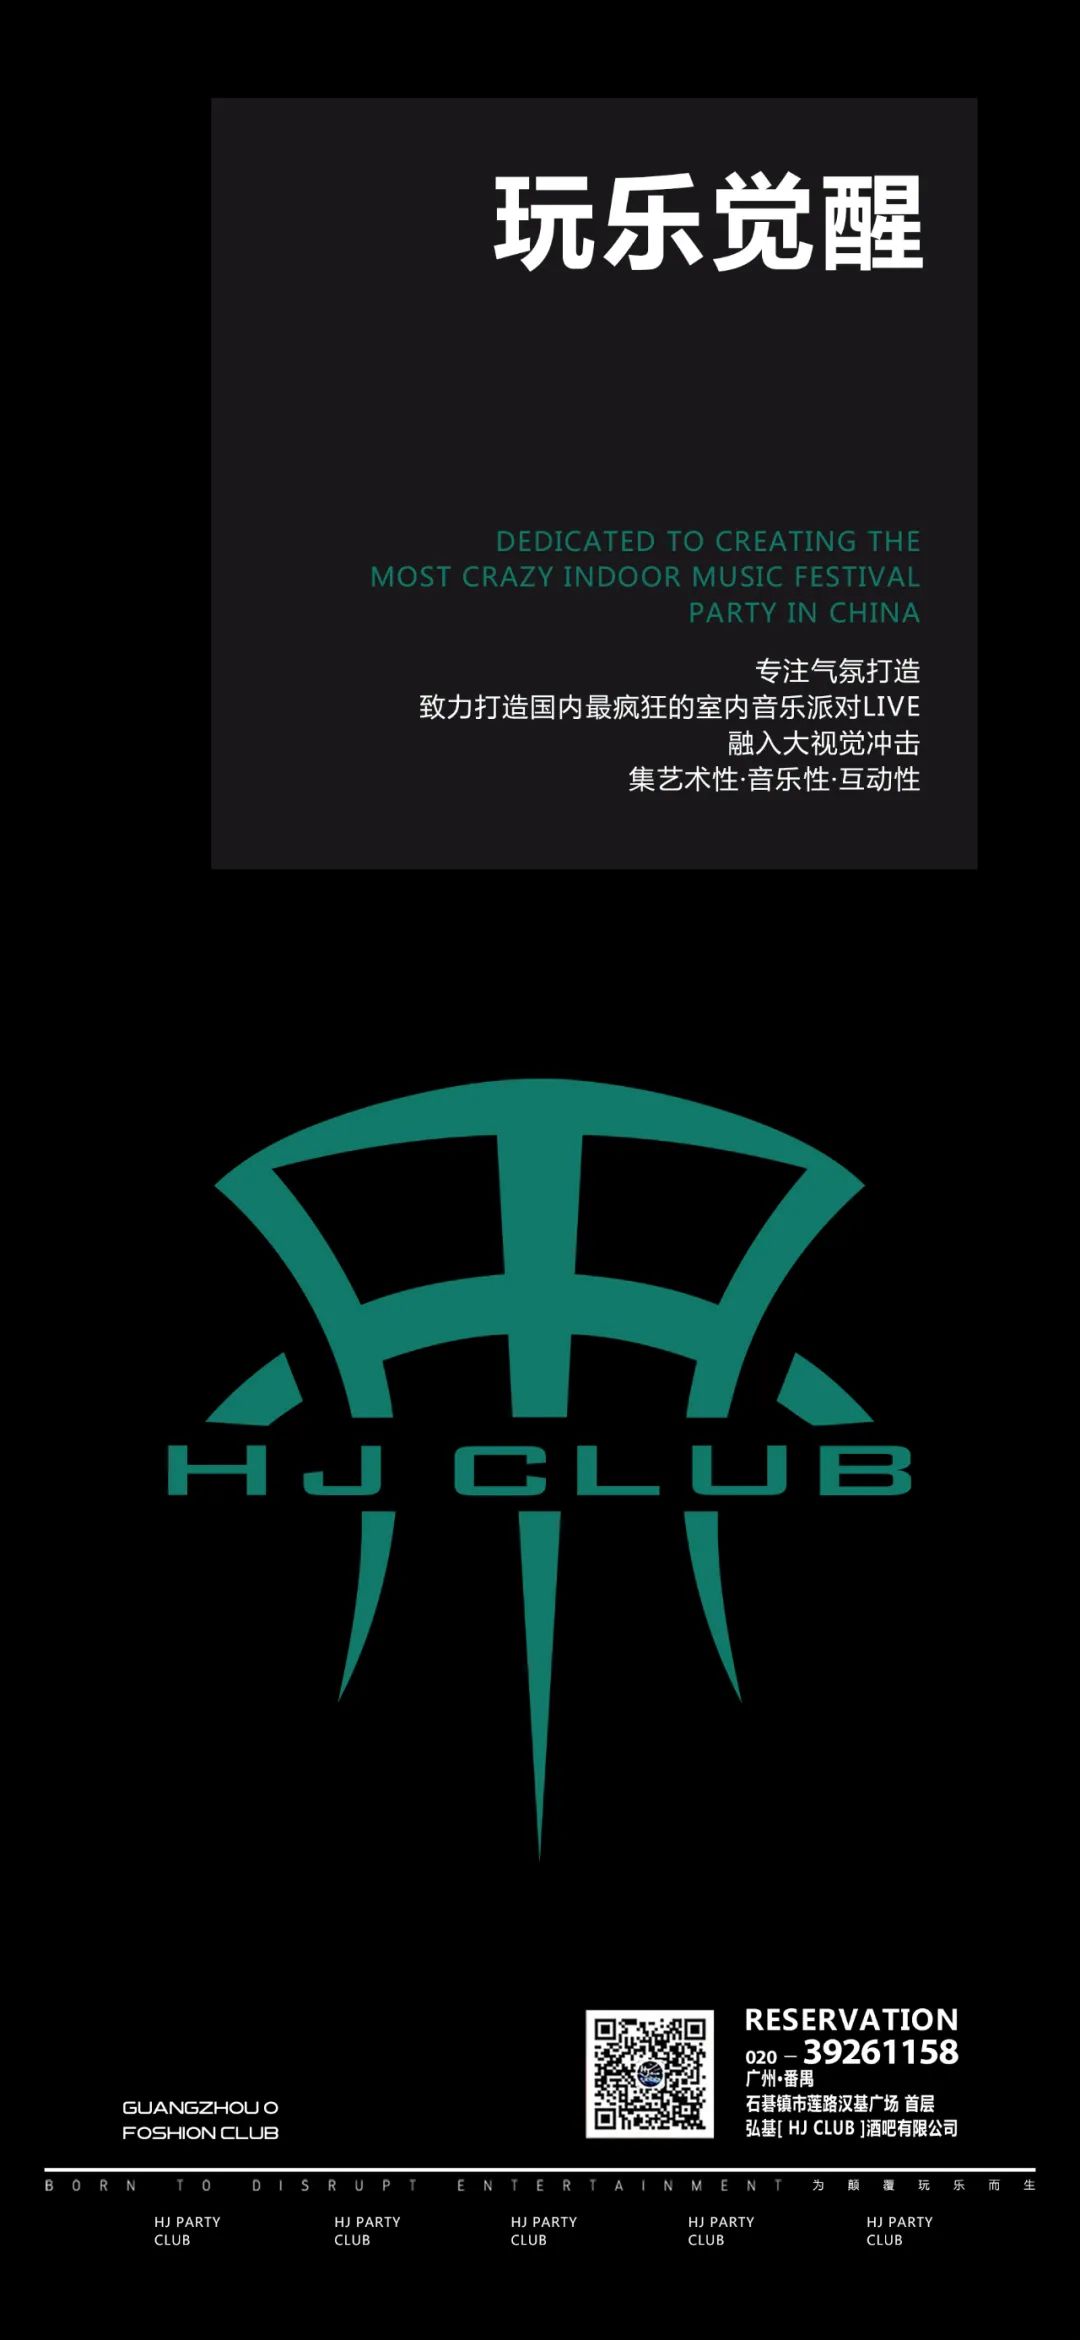 May.12丨BOOMBOOMBOOM 派对大门开启！-广州HJ酒吧/HJ CLUB